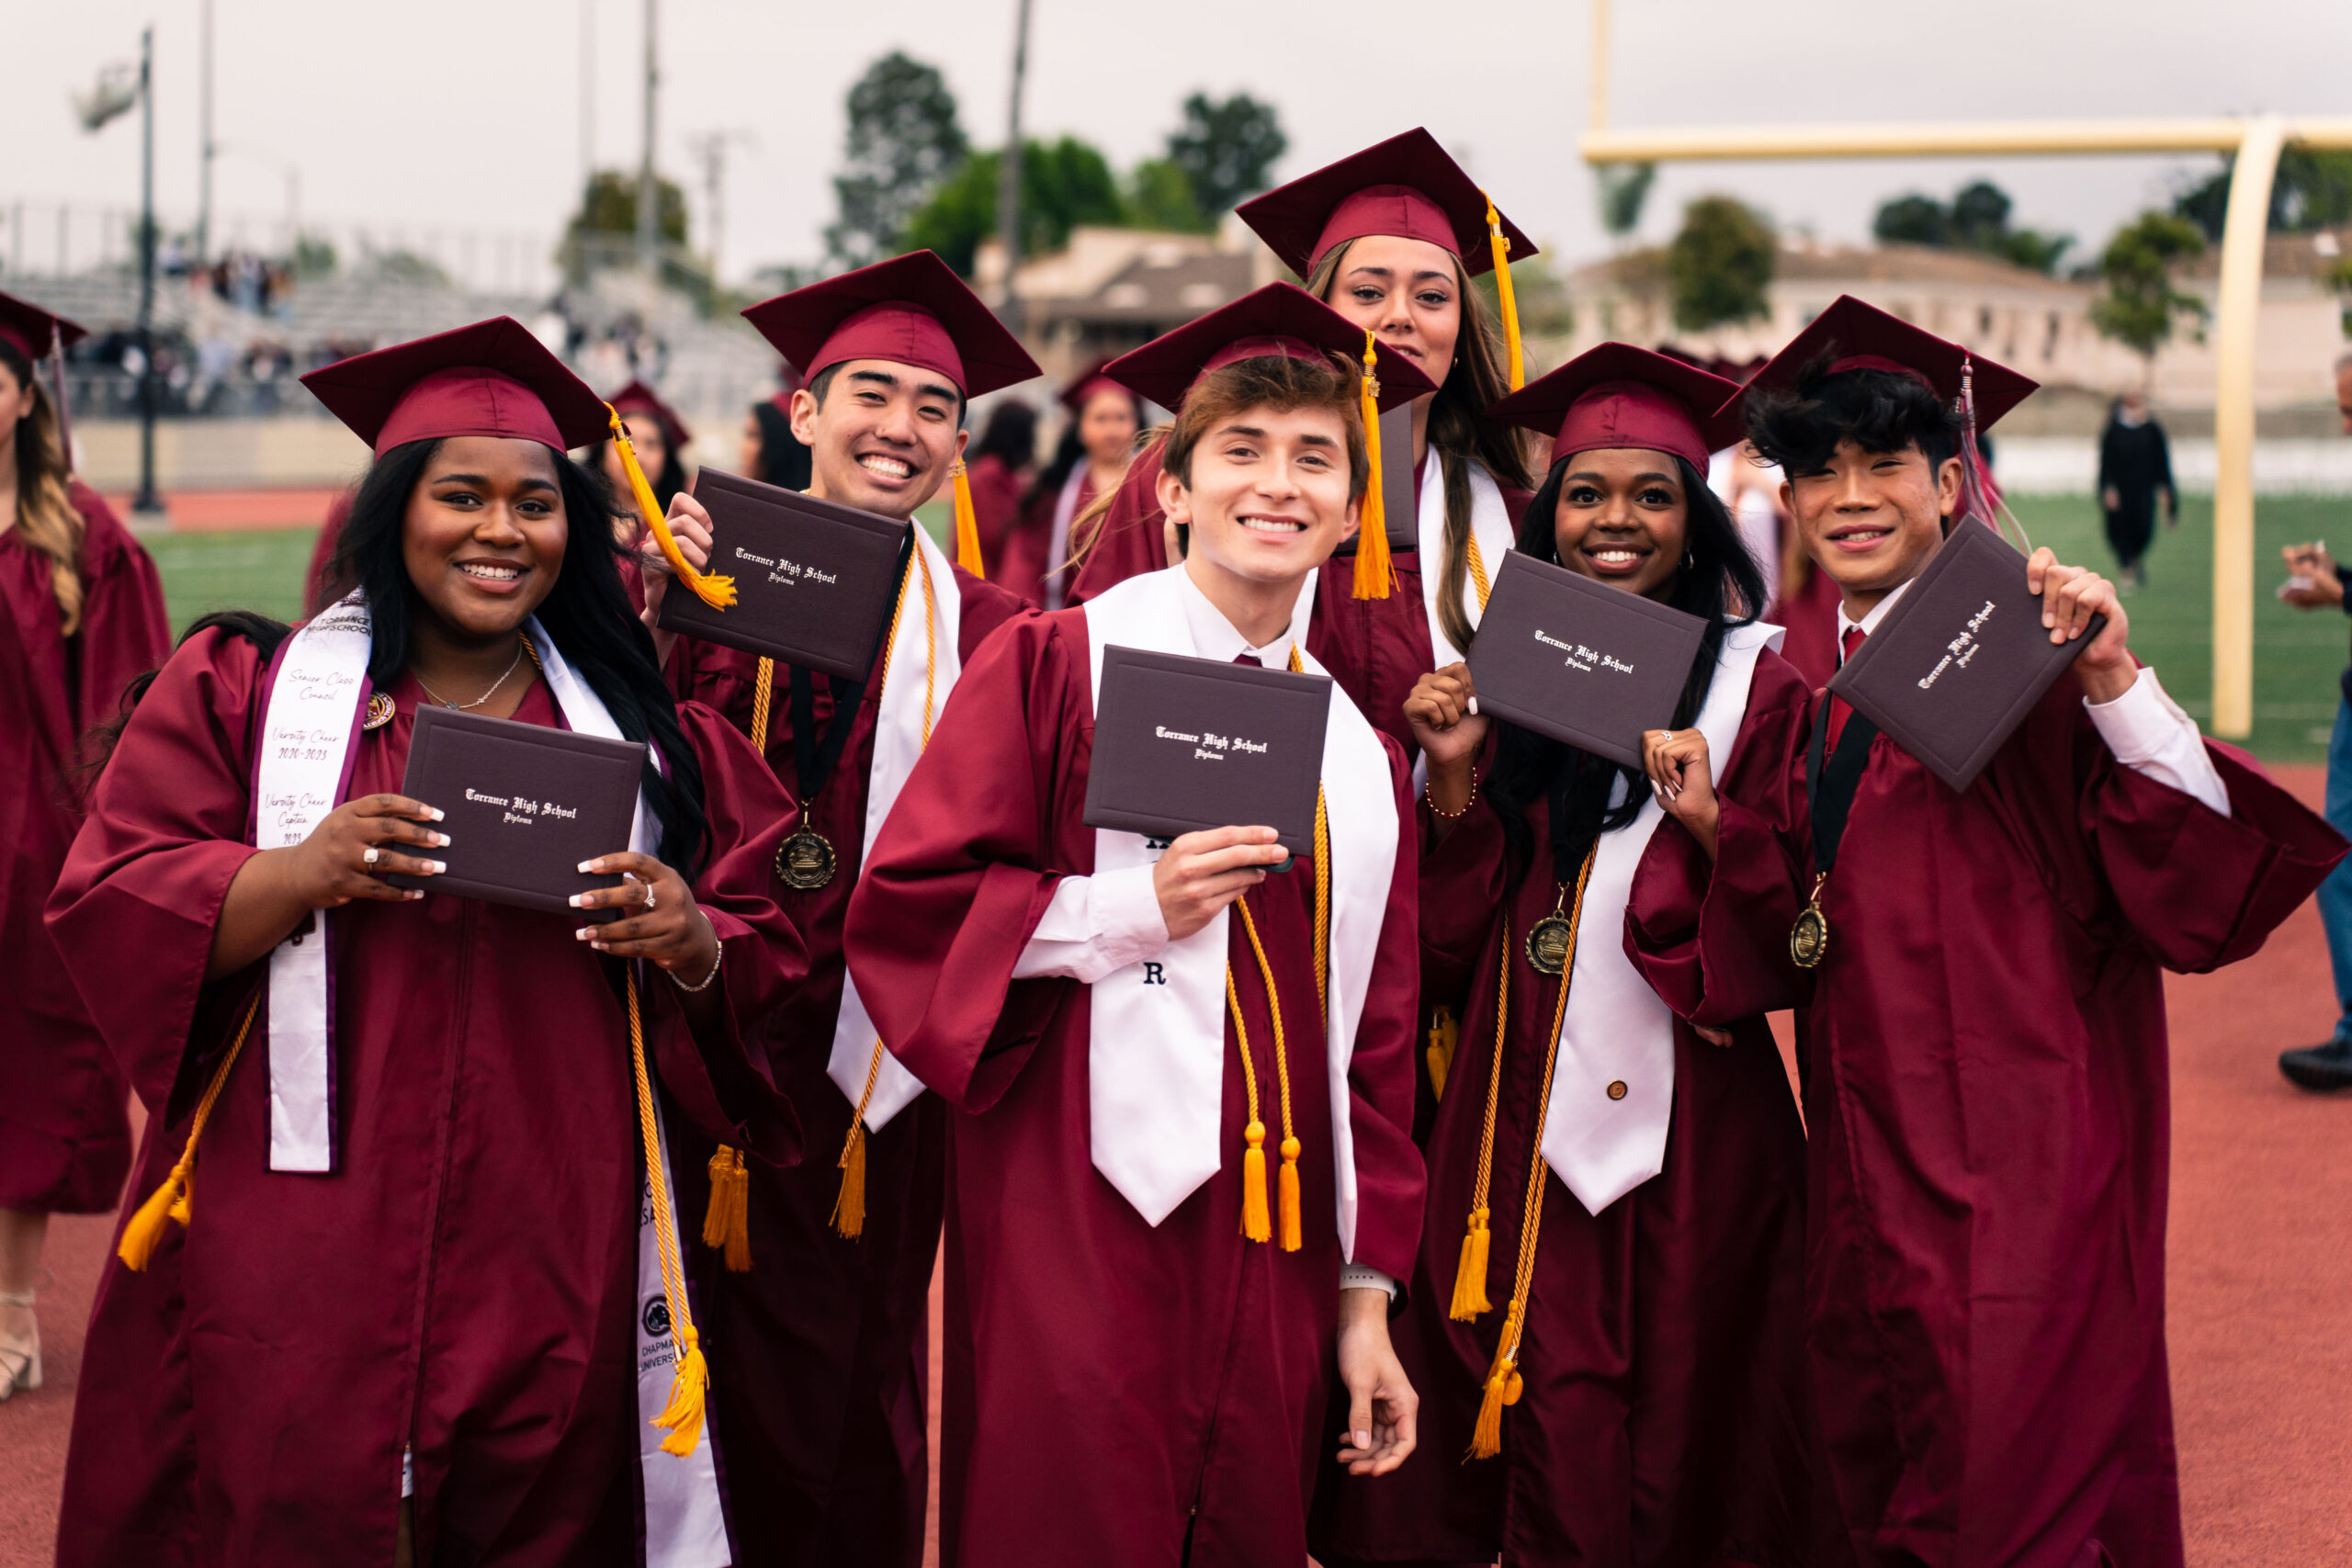 Graduates celebrating their high school diplomas